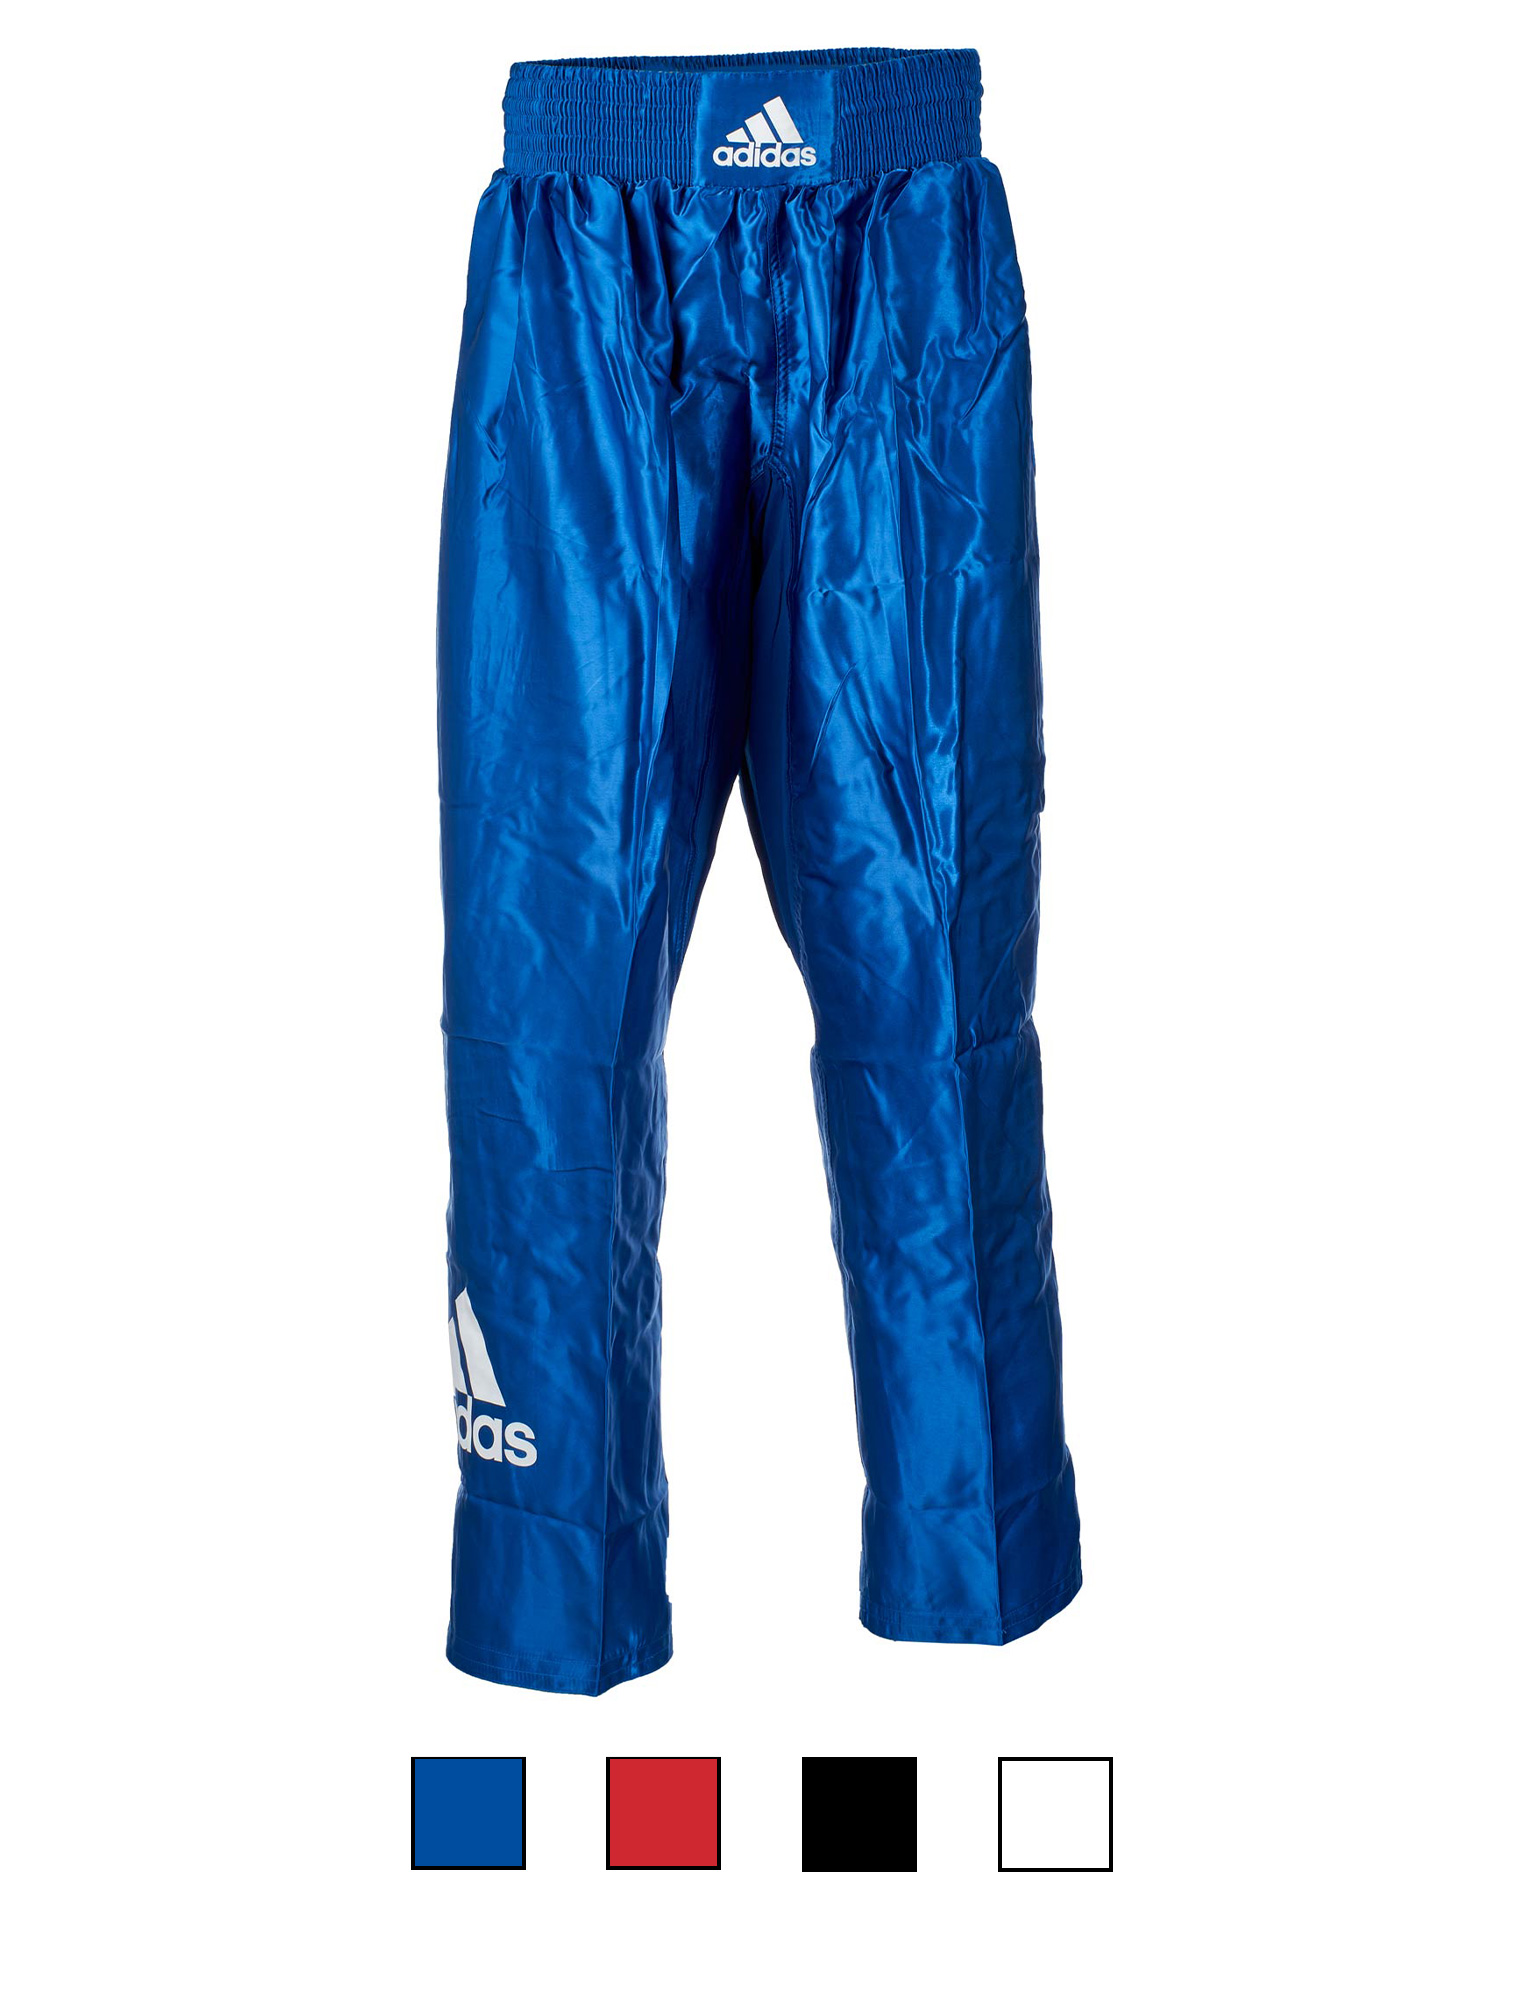 adidas kick boxing pants ADIPFC03, blue/white